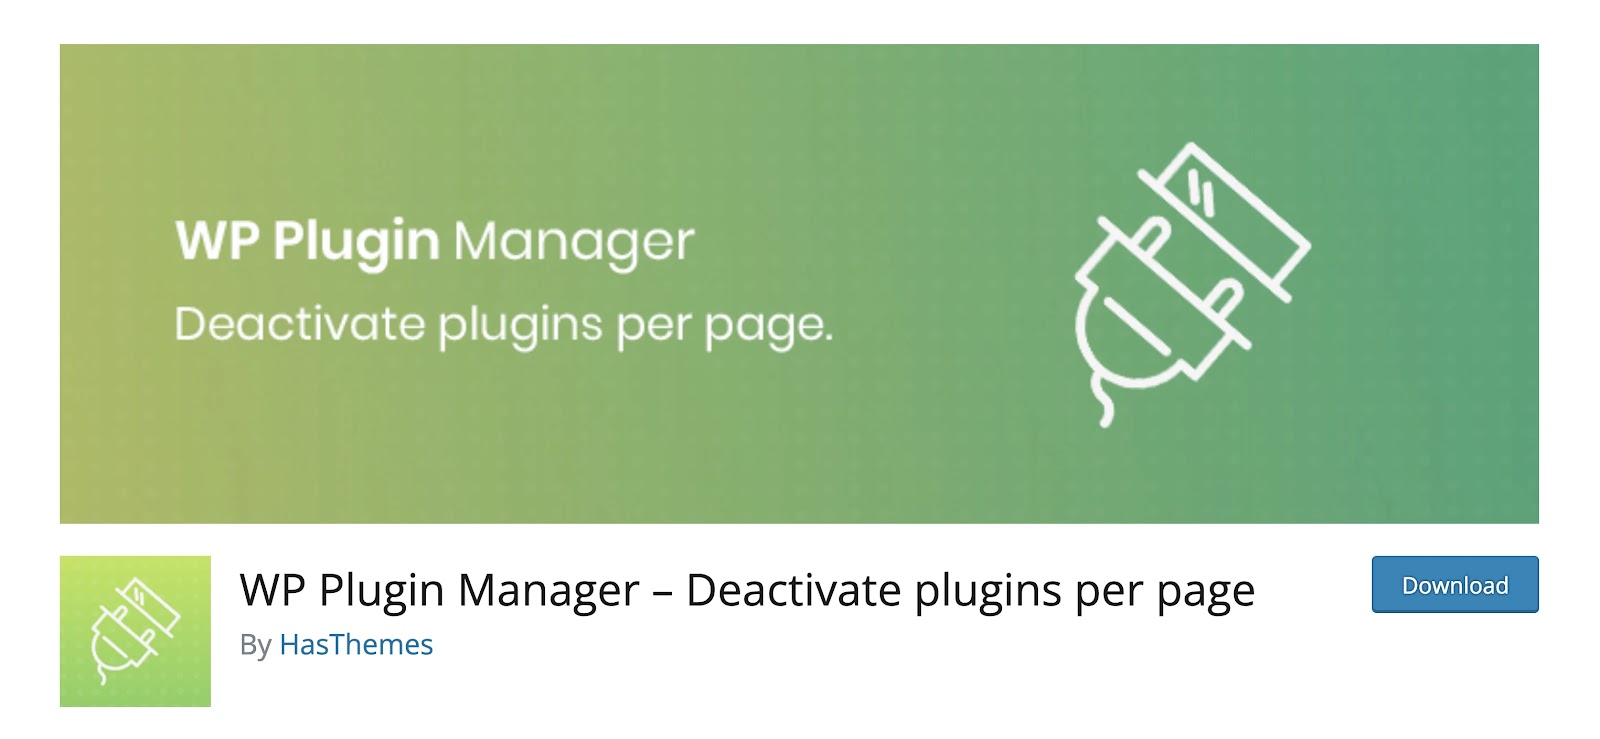 Captura de pantalla de WP Plugin Manager con un botón para descargar el software.